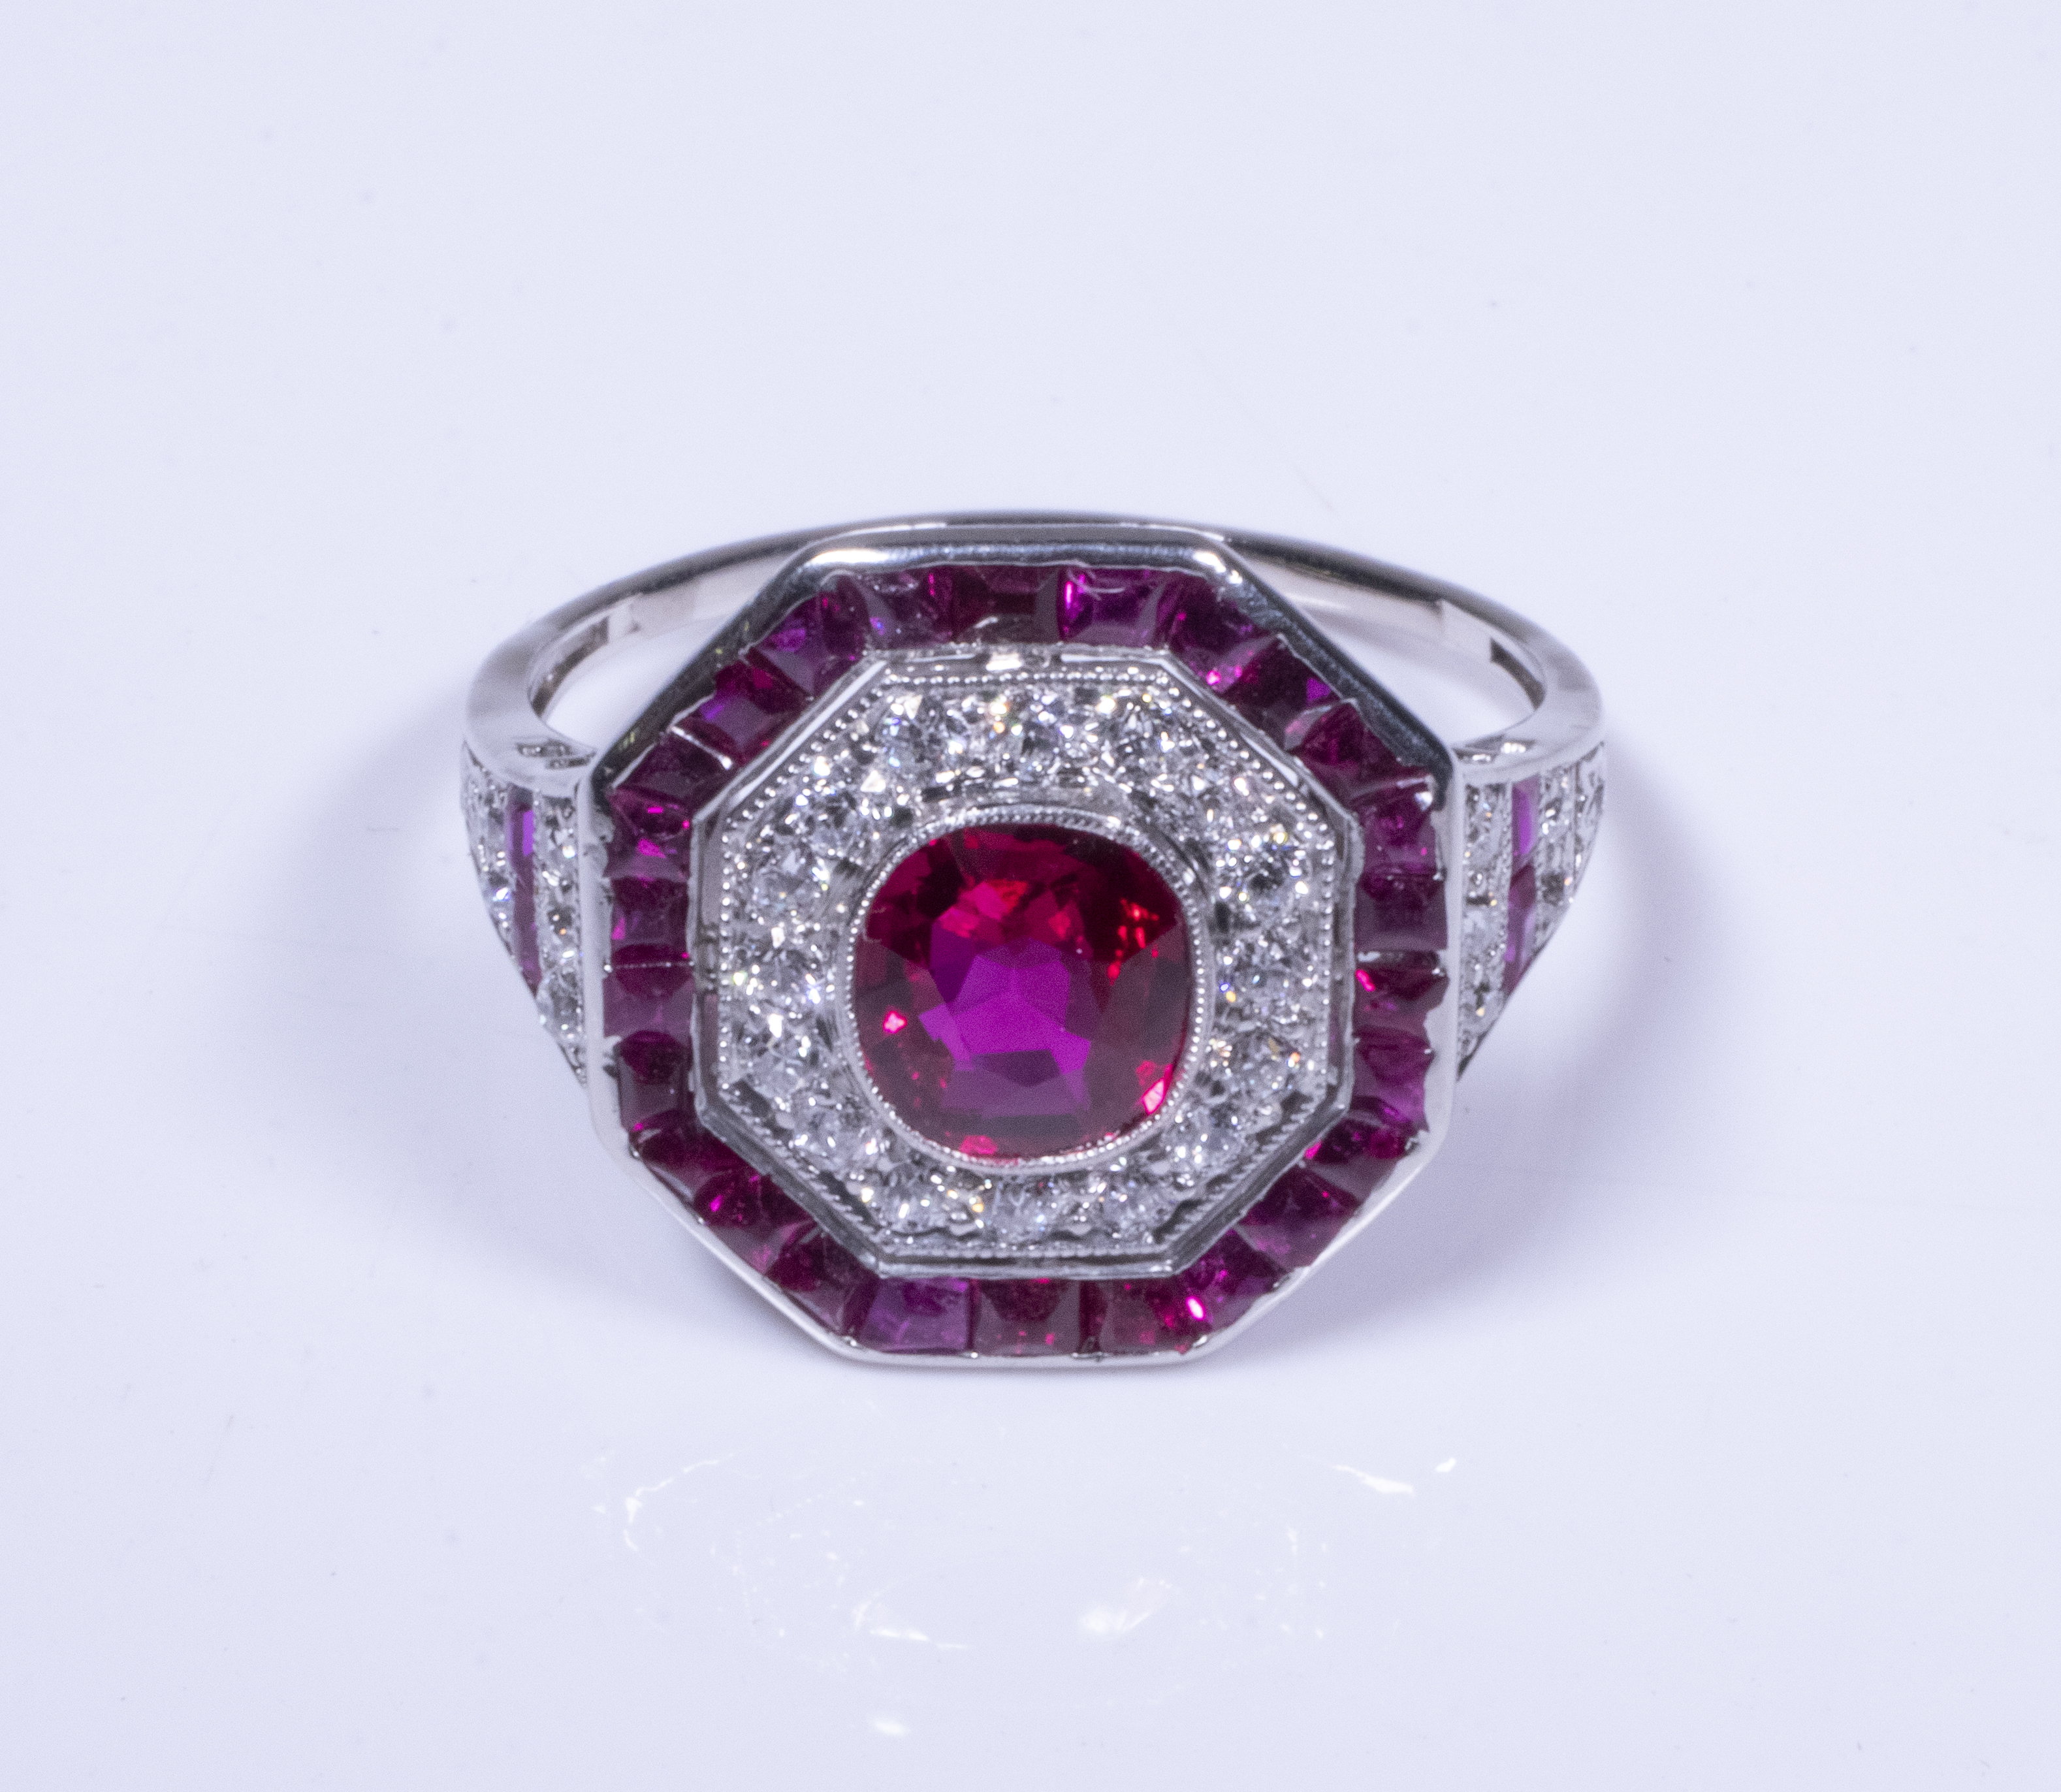 Ladies’ Edwardian platinum, ruby and diamond ring, est. $6,000-$8,000